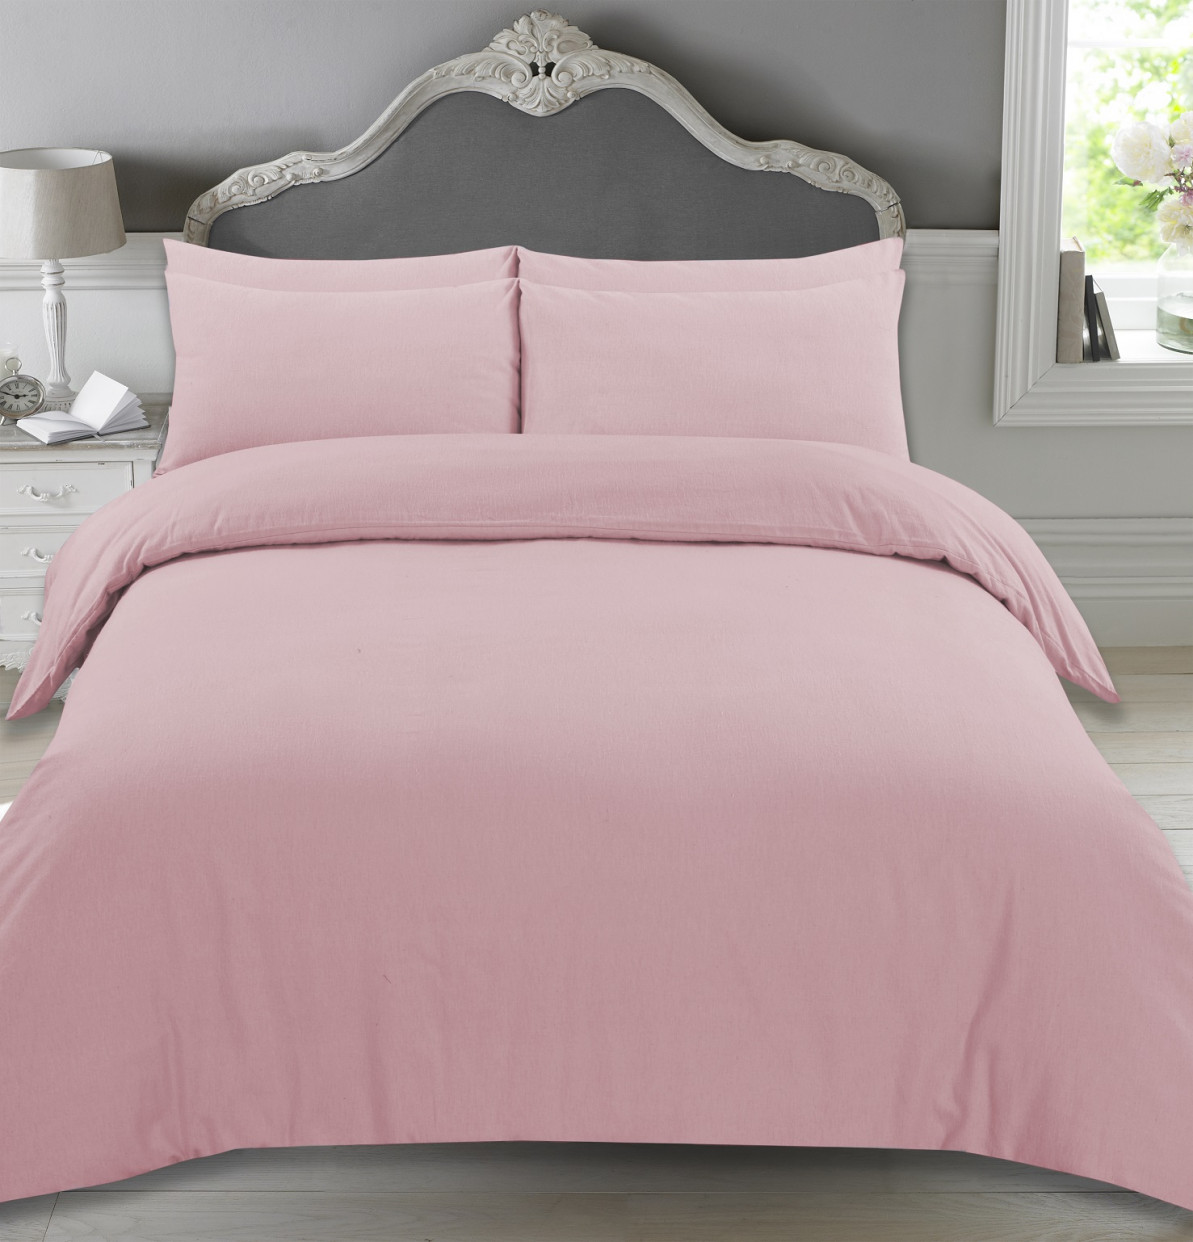 Highams Brushed Cotton Duvet Cover Set, Blush Pink - Double>